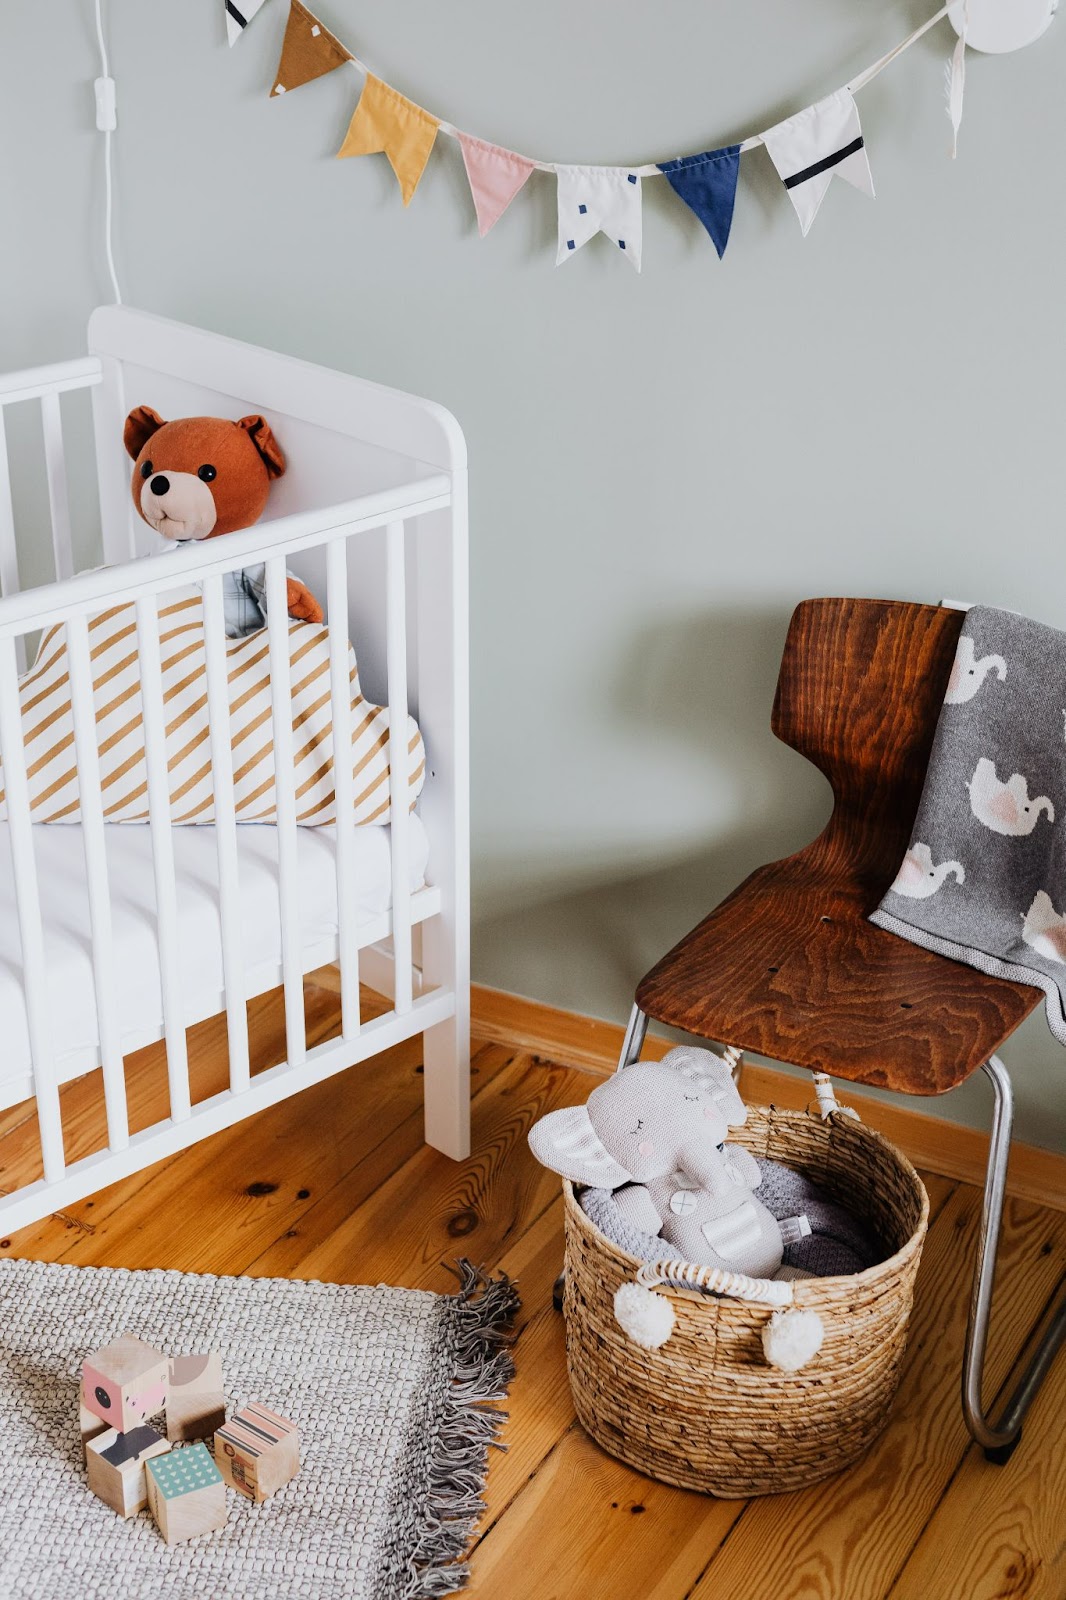 Toddler’s bedroom -Toddler bedroom ideas featured image - Baby Journey